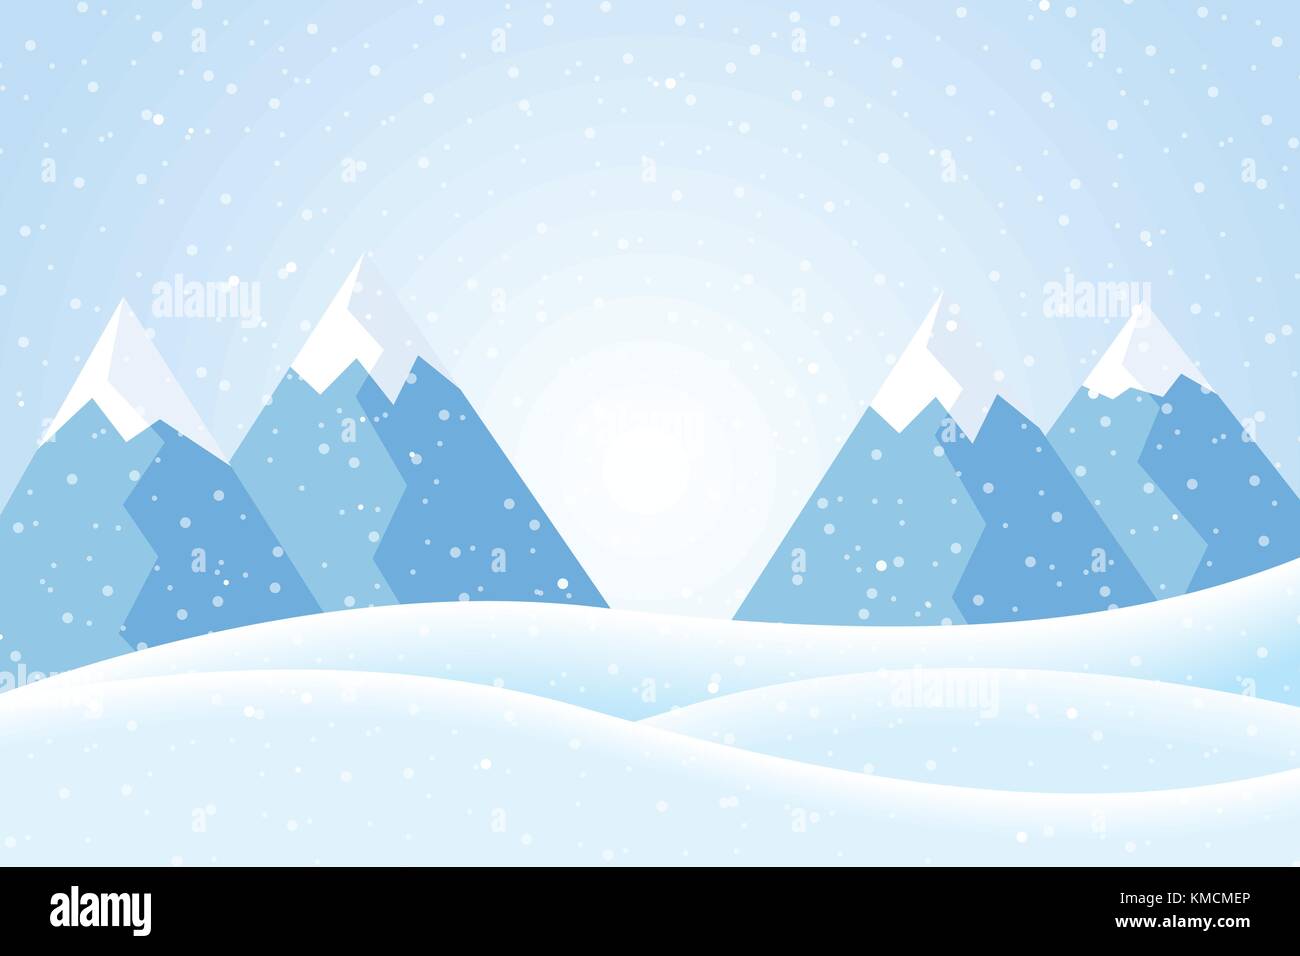 Snow mountain cartoon design hi-res stock photography and images - Alamy